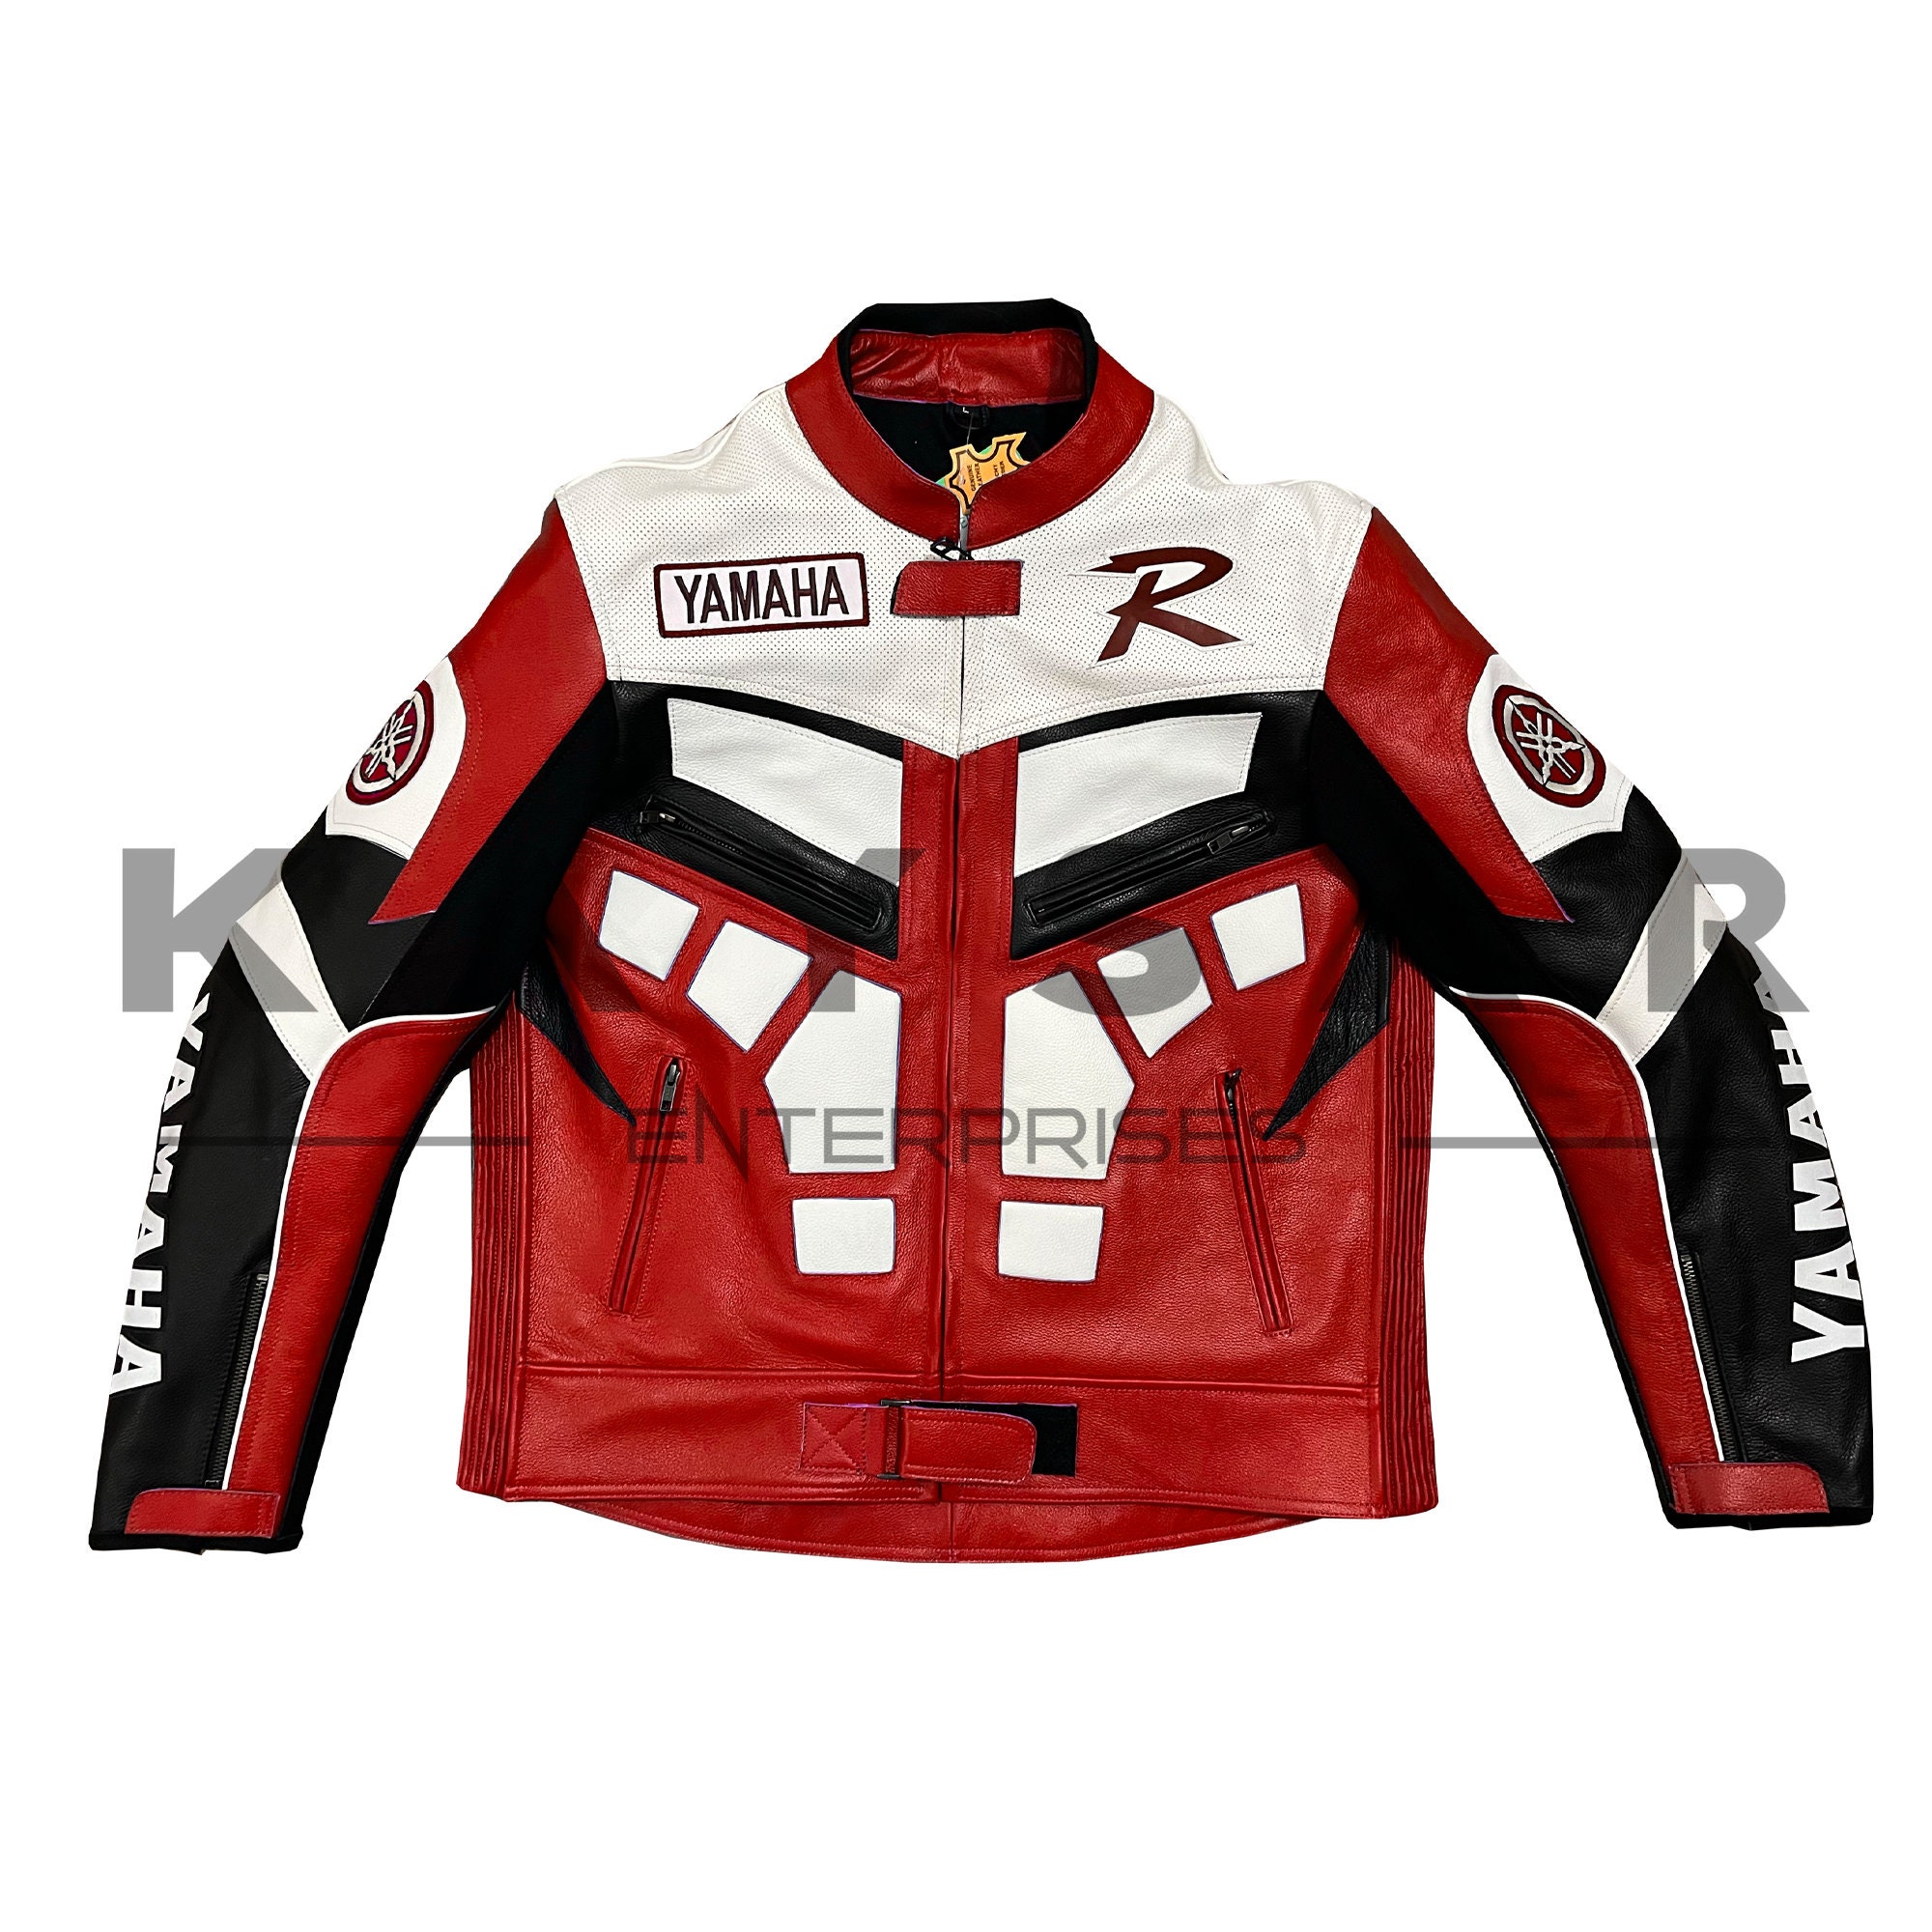 Customised Red R Motorbike 90's Motorbike - Etsy